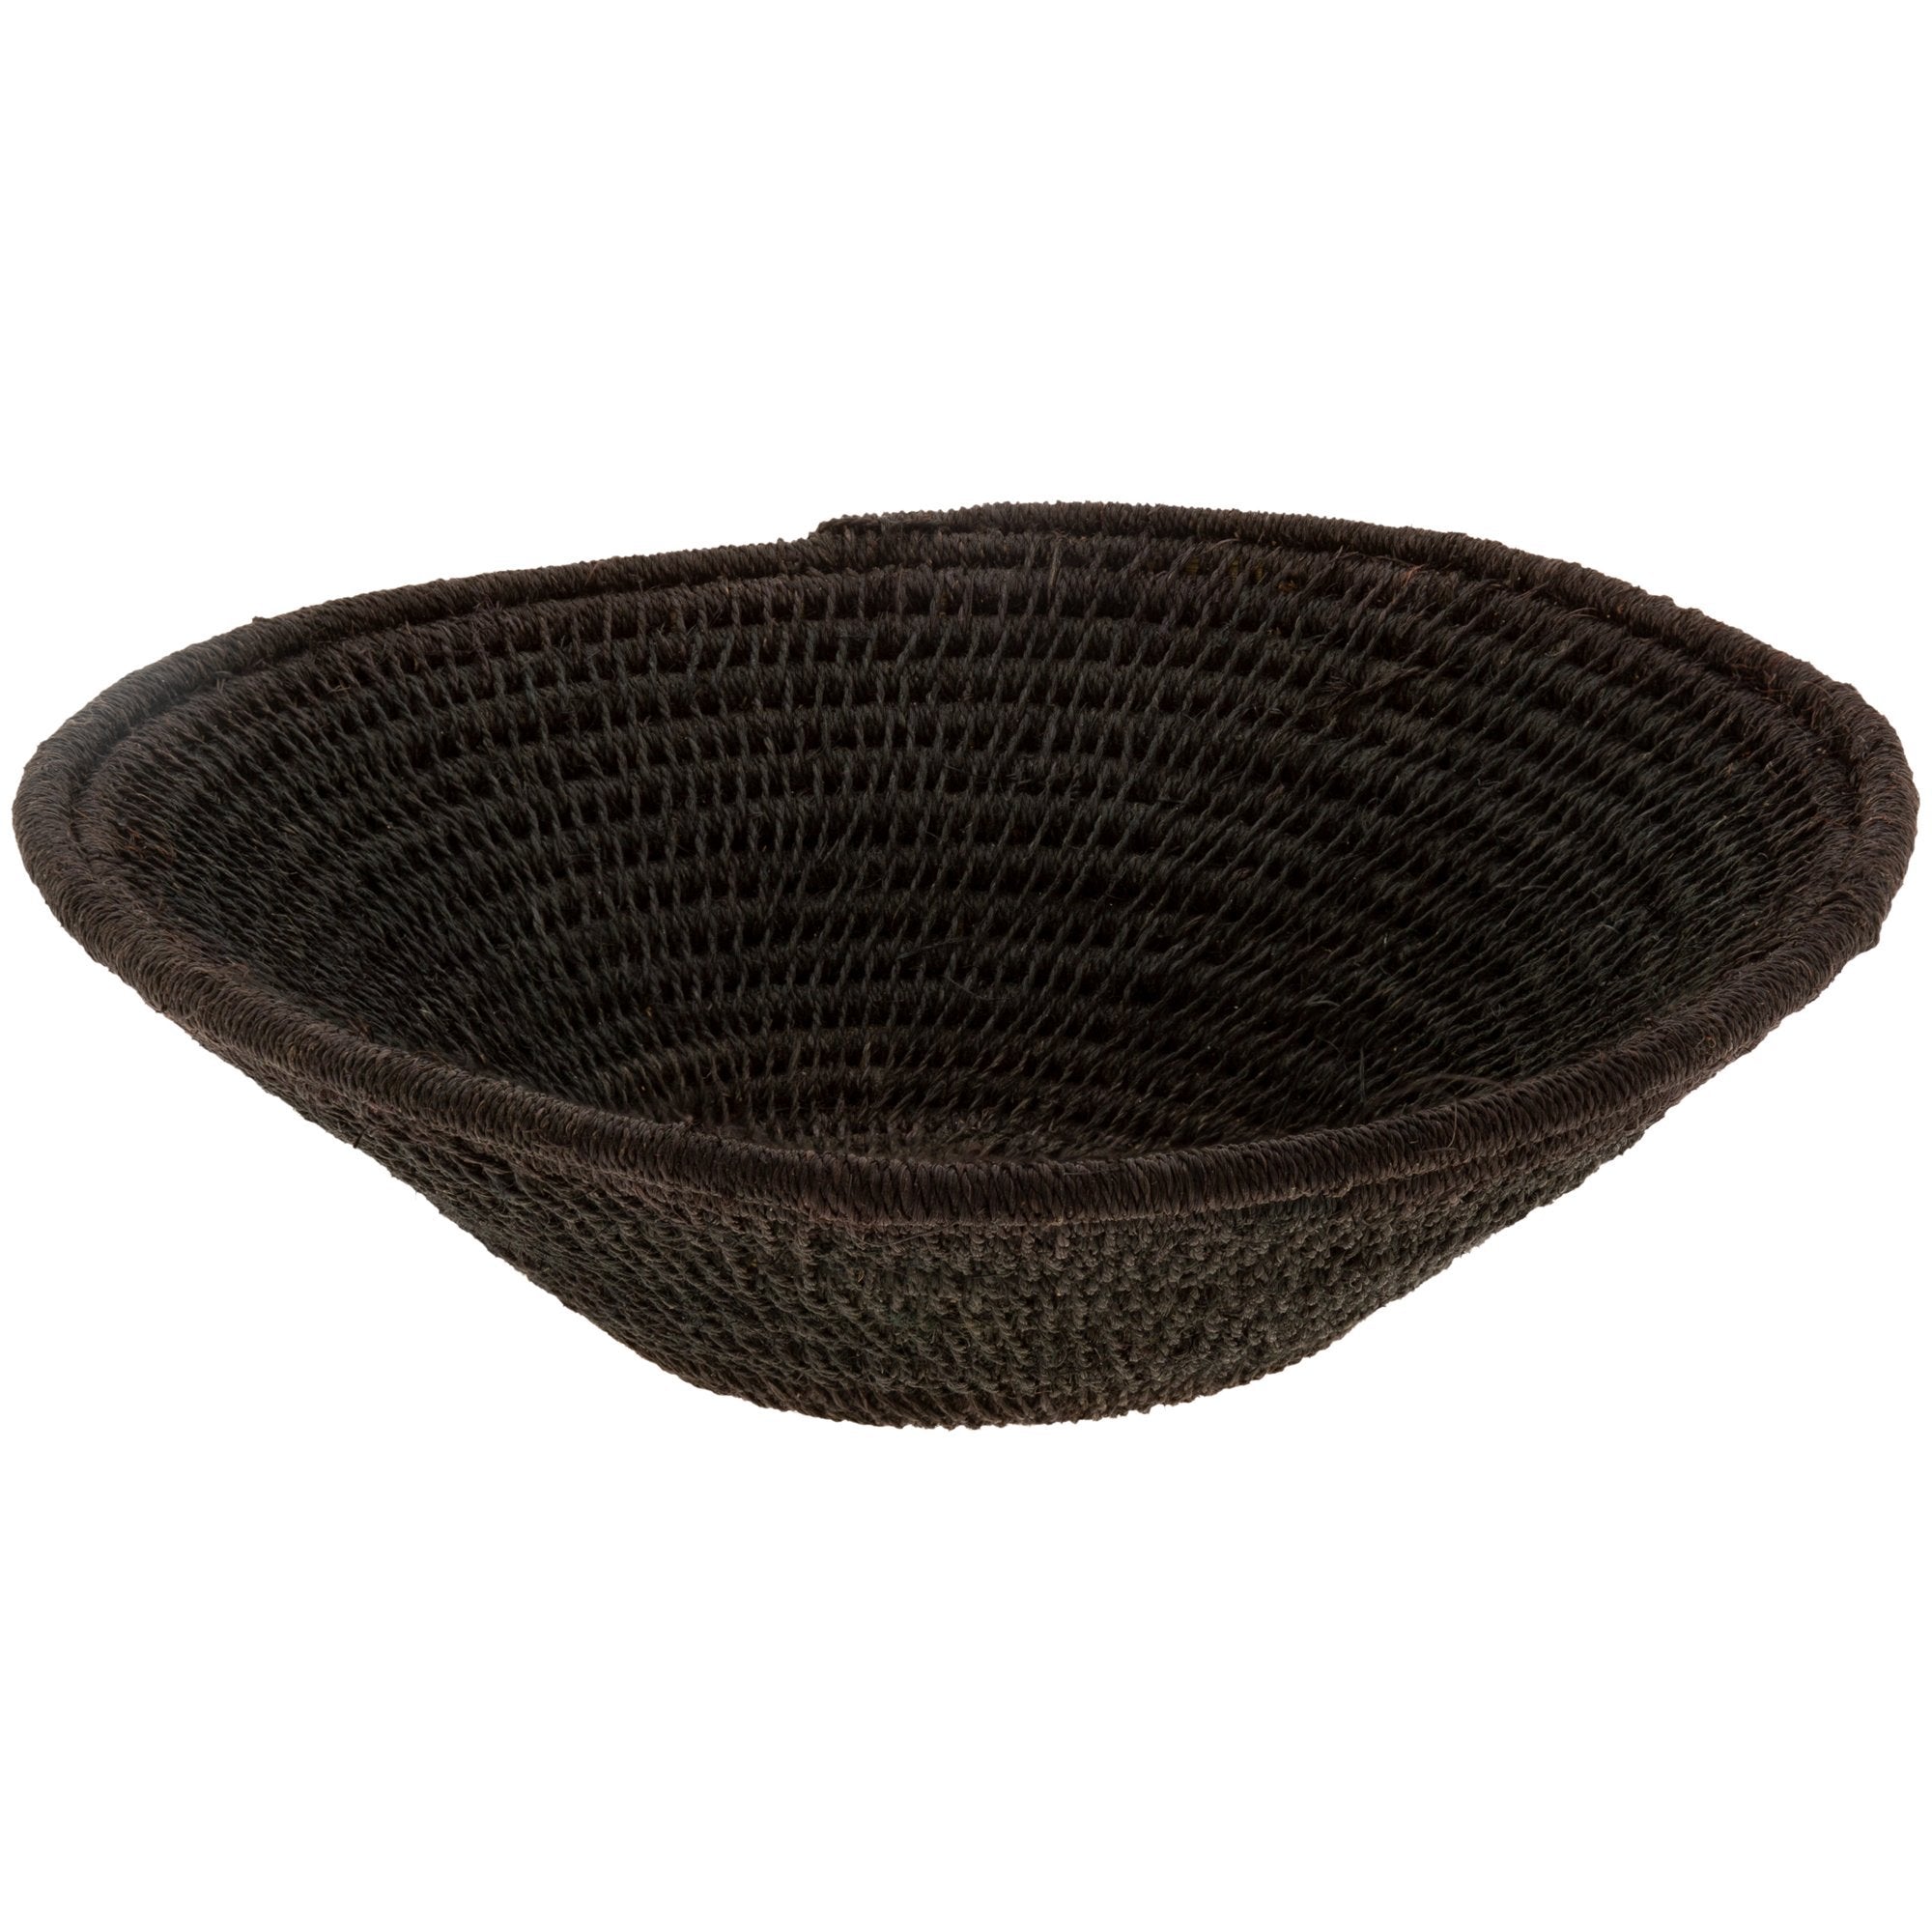 Handwoven Sisal Petite Basket - Black